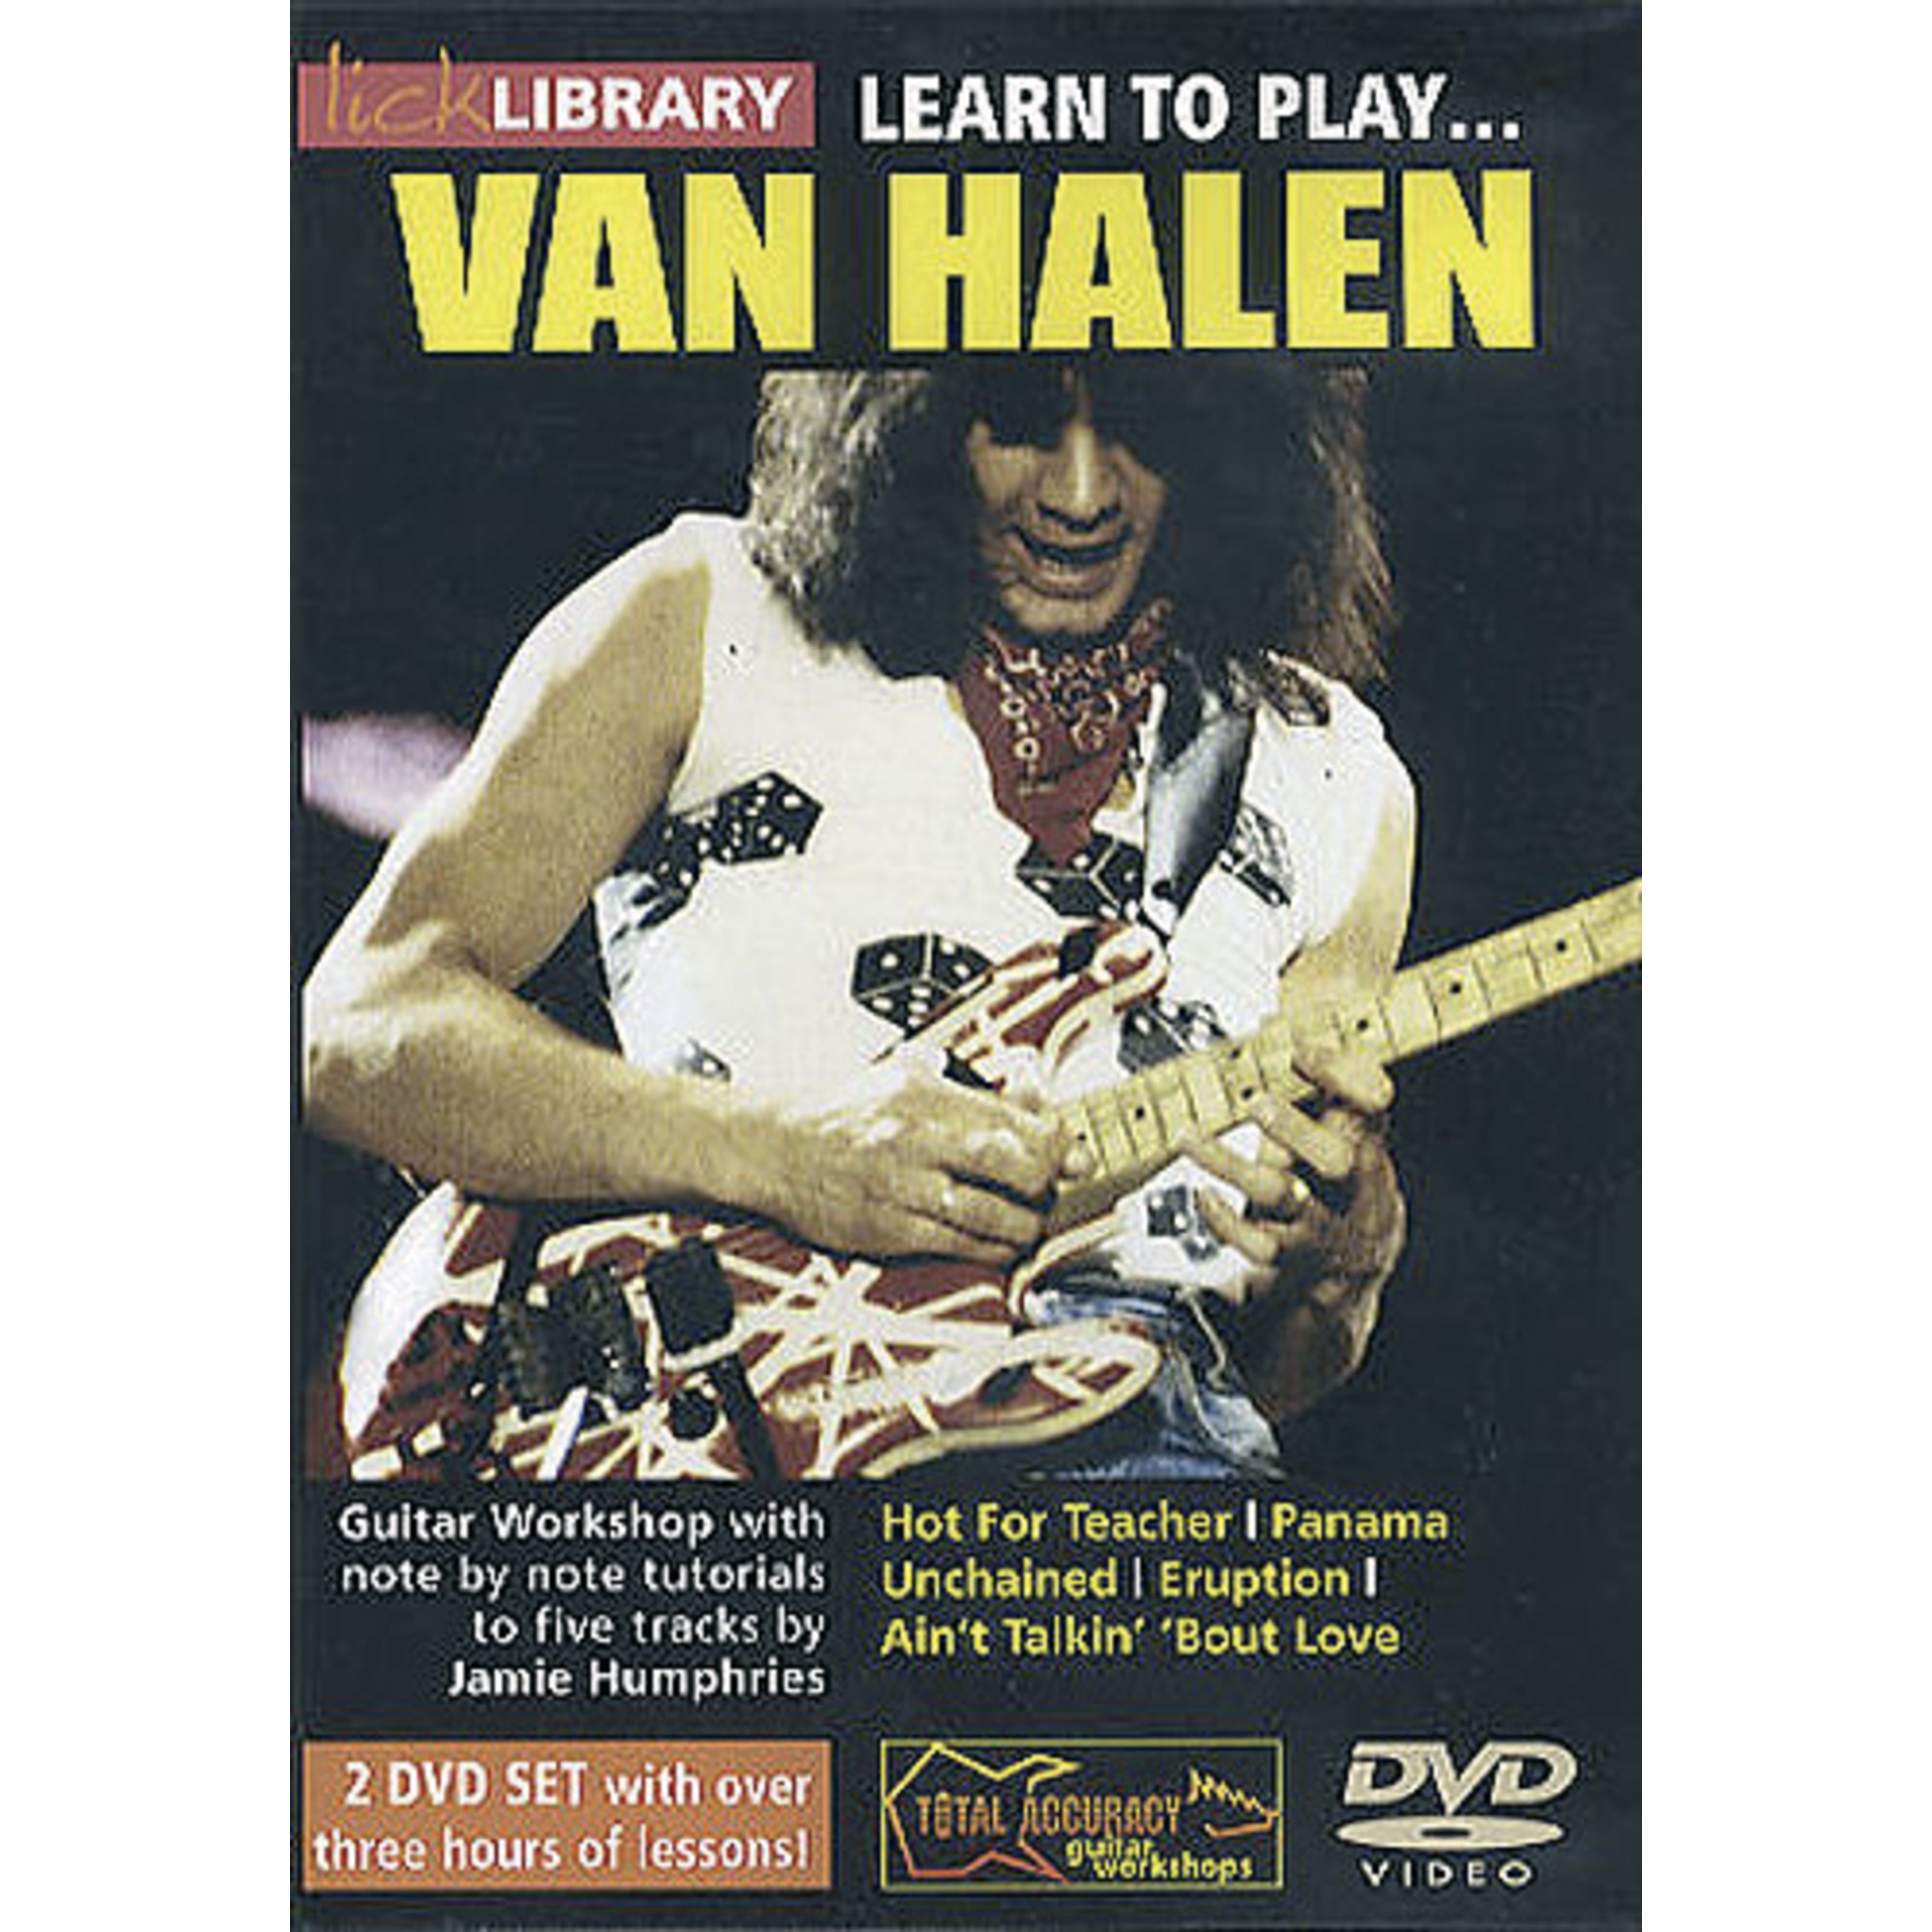 Roadrock International Lick Library: Learn To Play Van Halen DVD - DVD